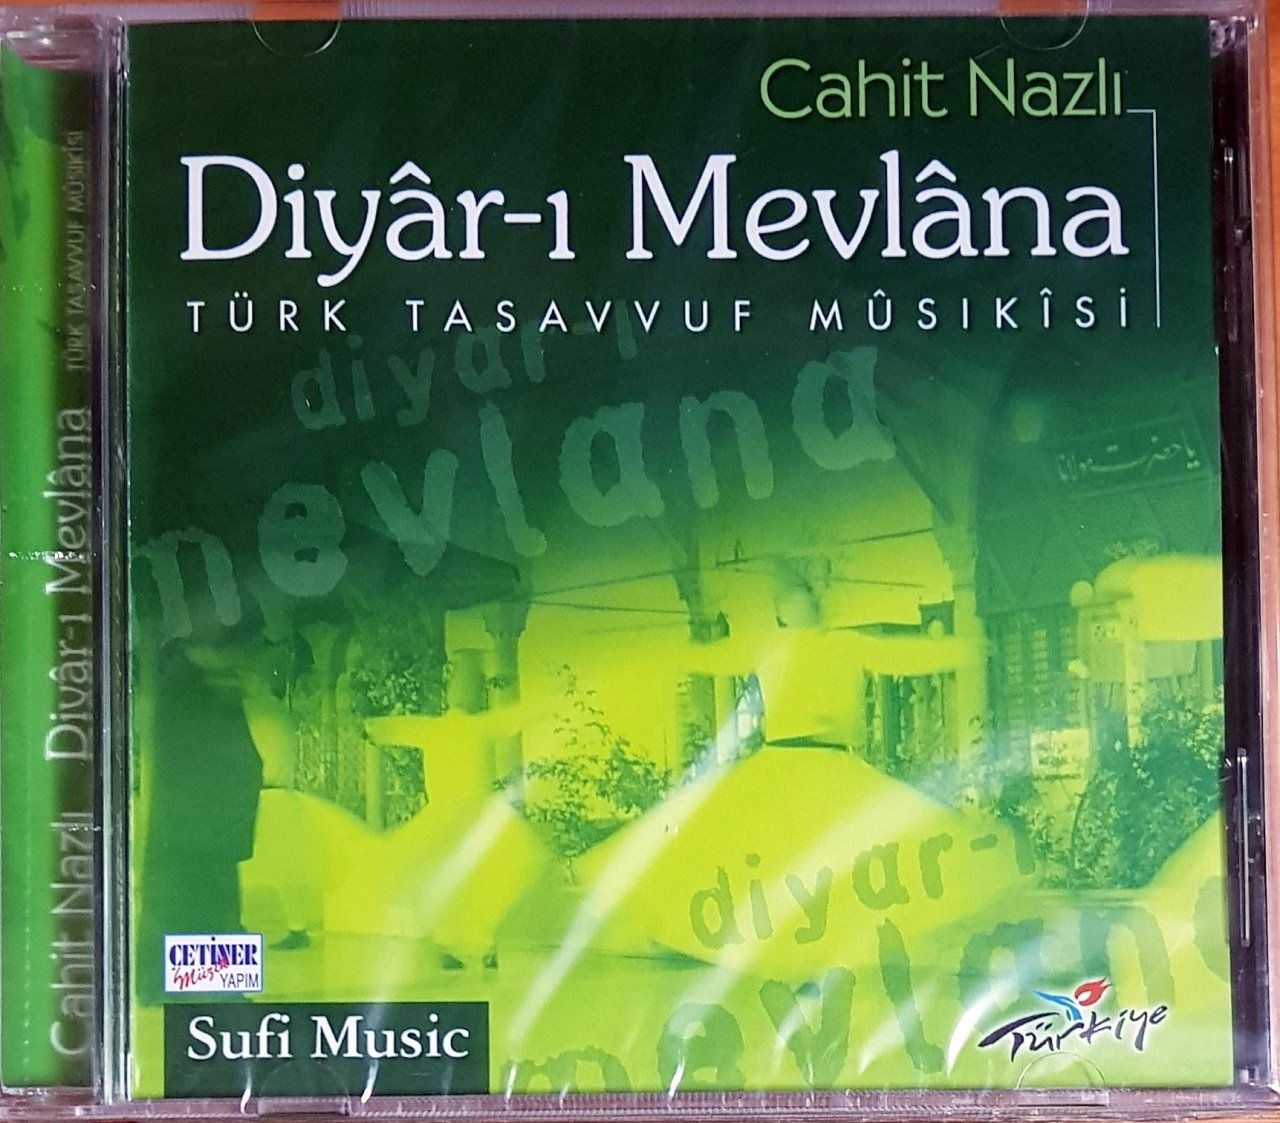 CAHİT NAZLI - DİYAR-I MEVLANA / TÜRK TASAVVUF MUSİKİSİ / SUFI MUSIC (2003) ÇETİNER MÜZİK CD SIFIR